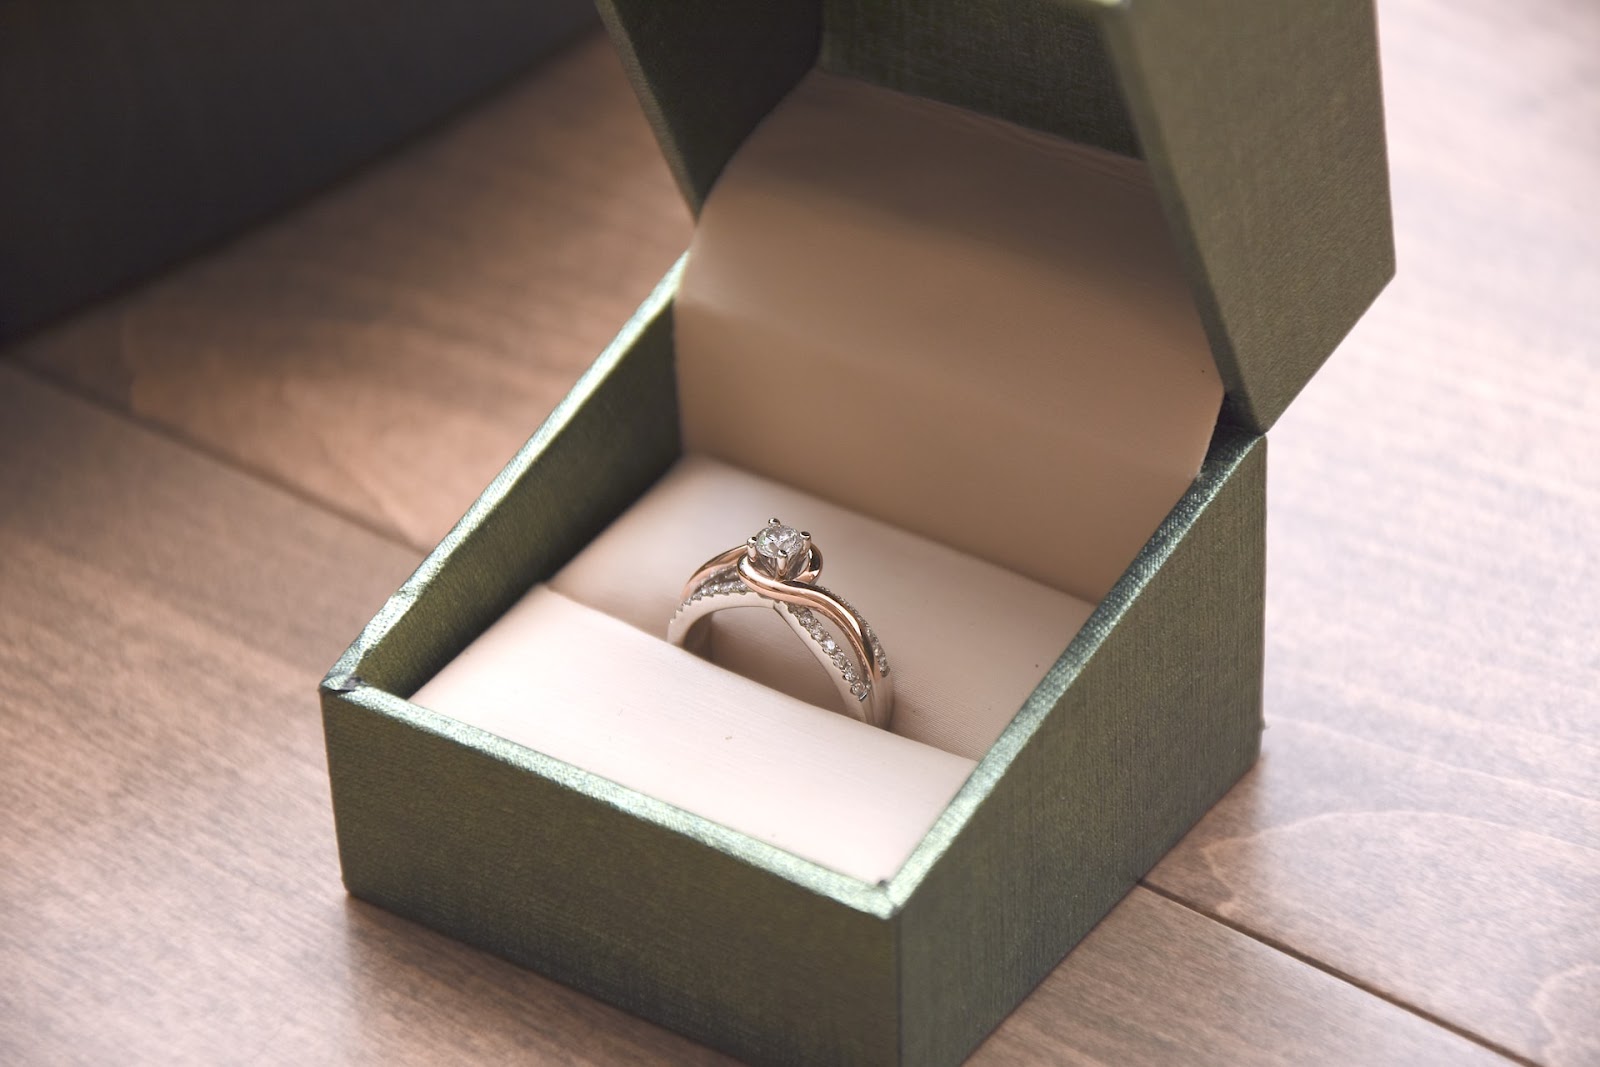 A wedding ring with a gem